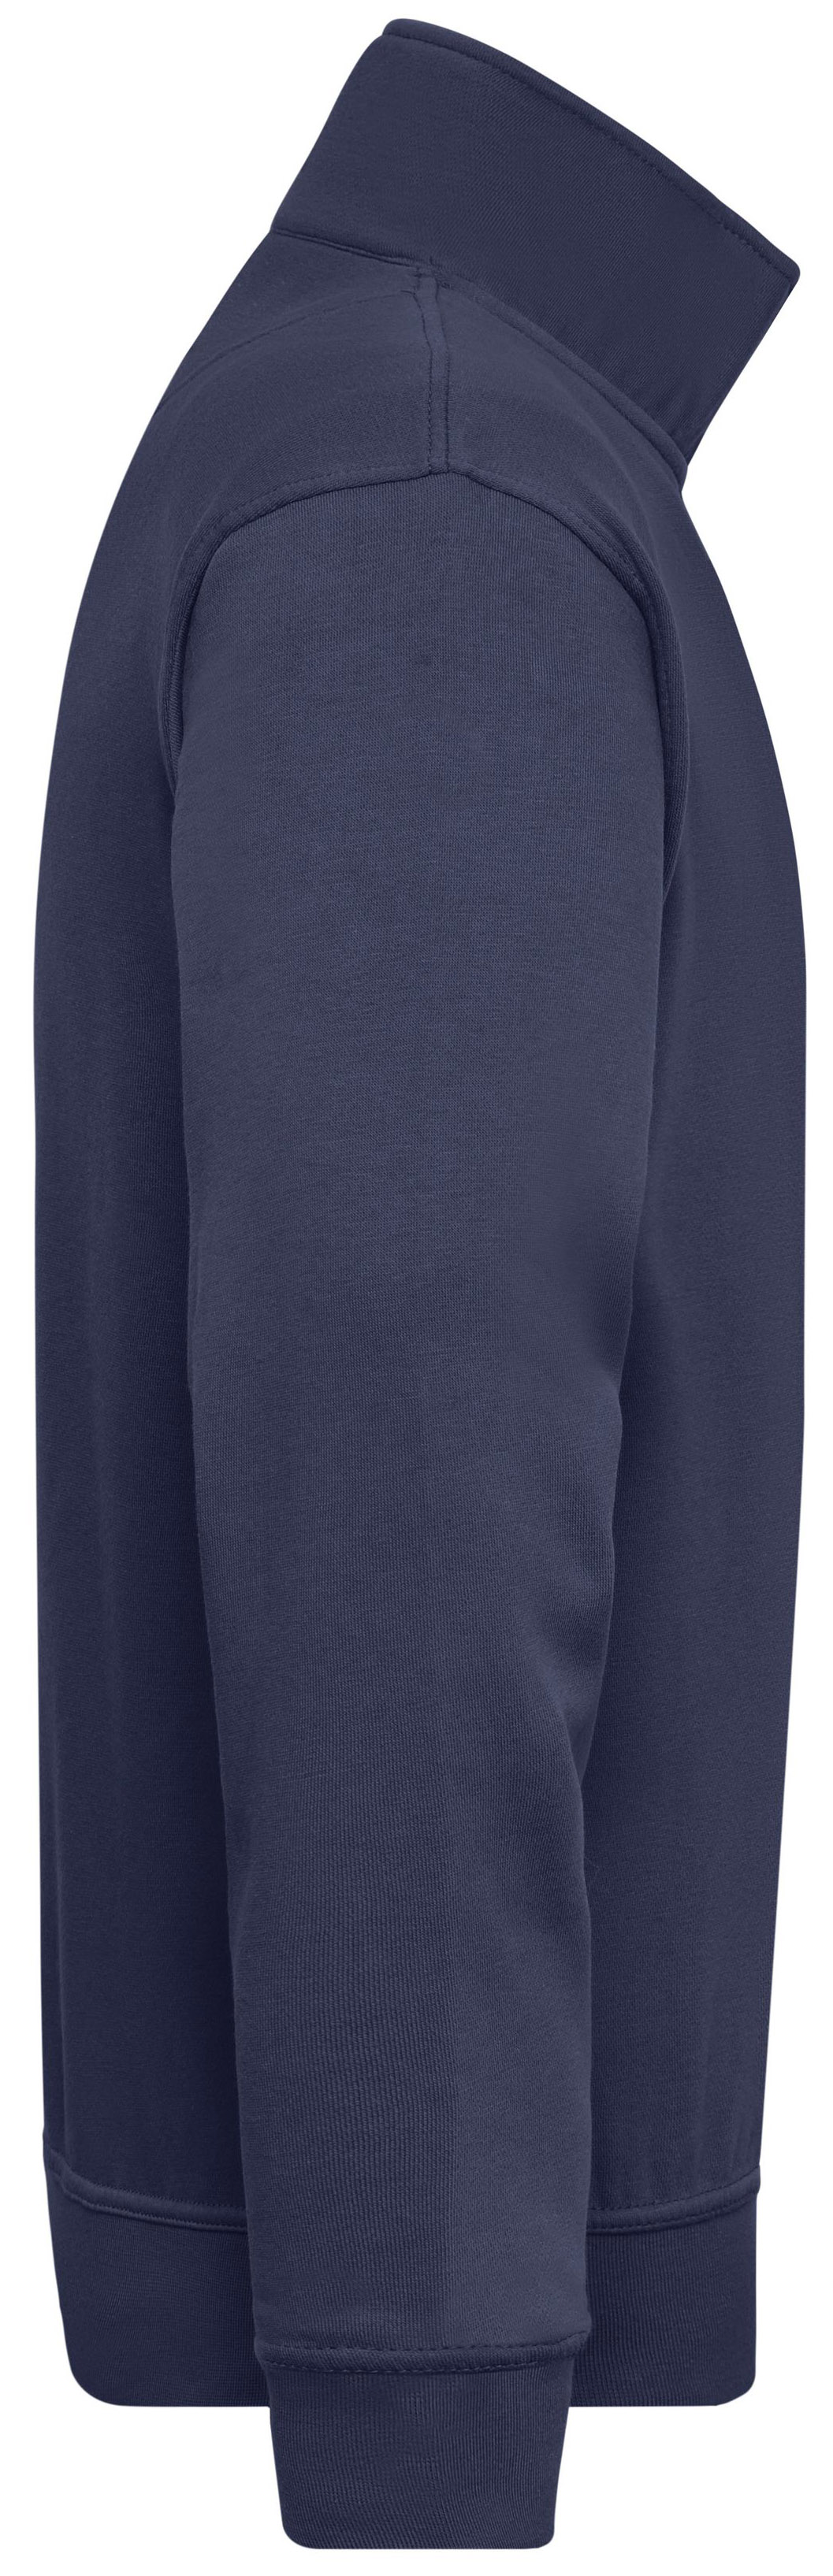 Workwear Sweater Half-Zip